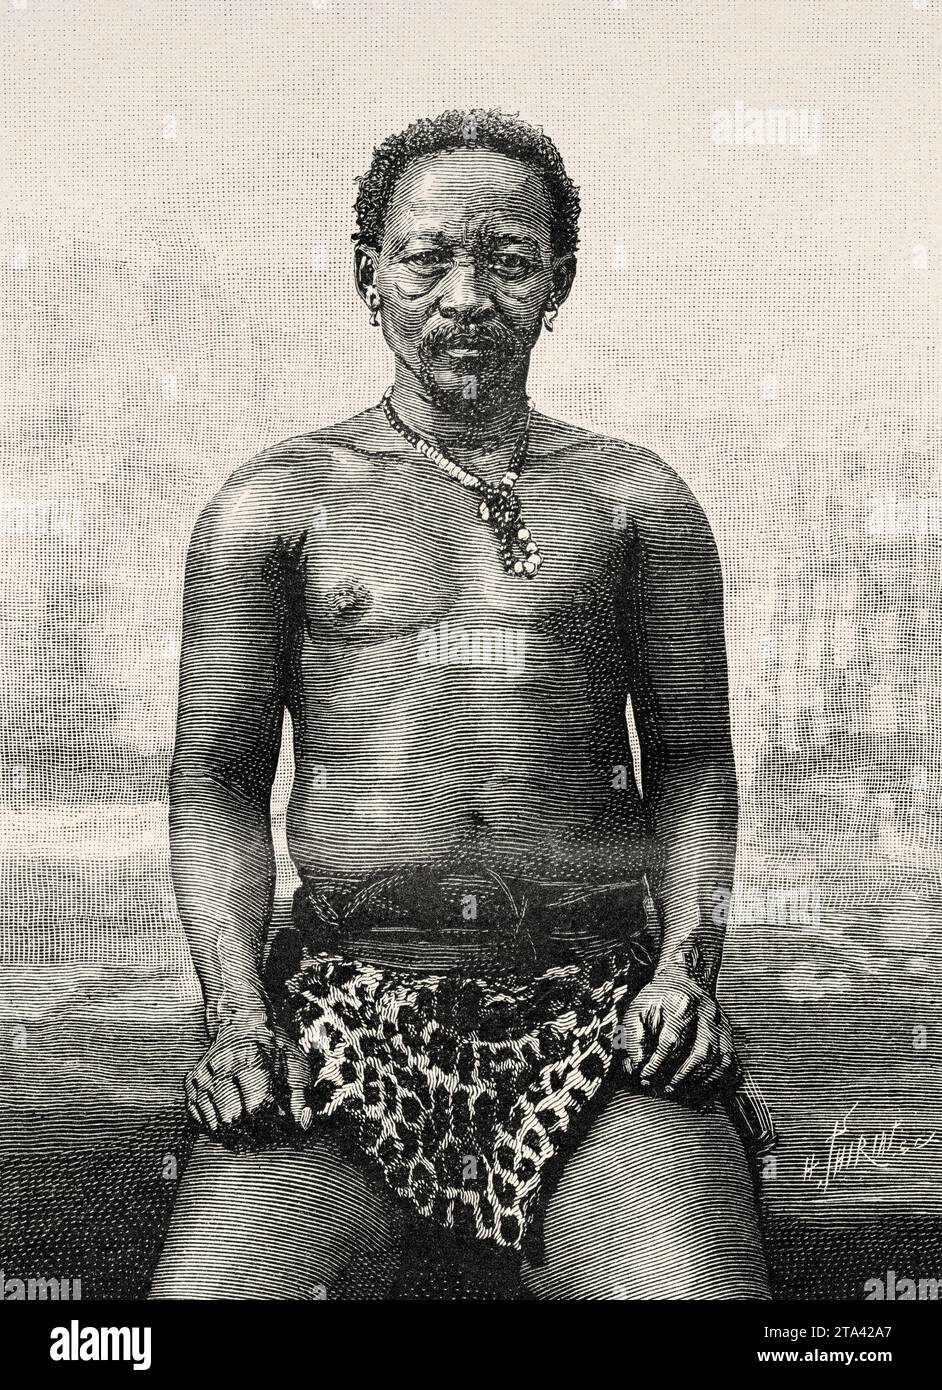 Portrait of a Bushman man. Old illustration from La Nature 1887 Stock Photo